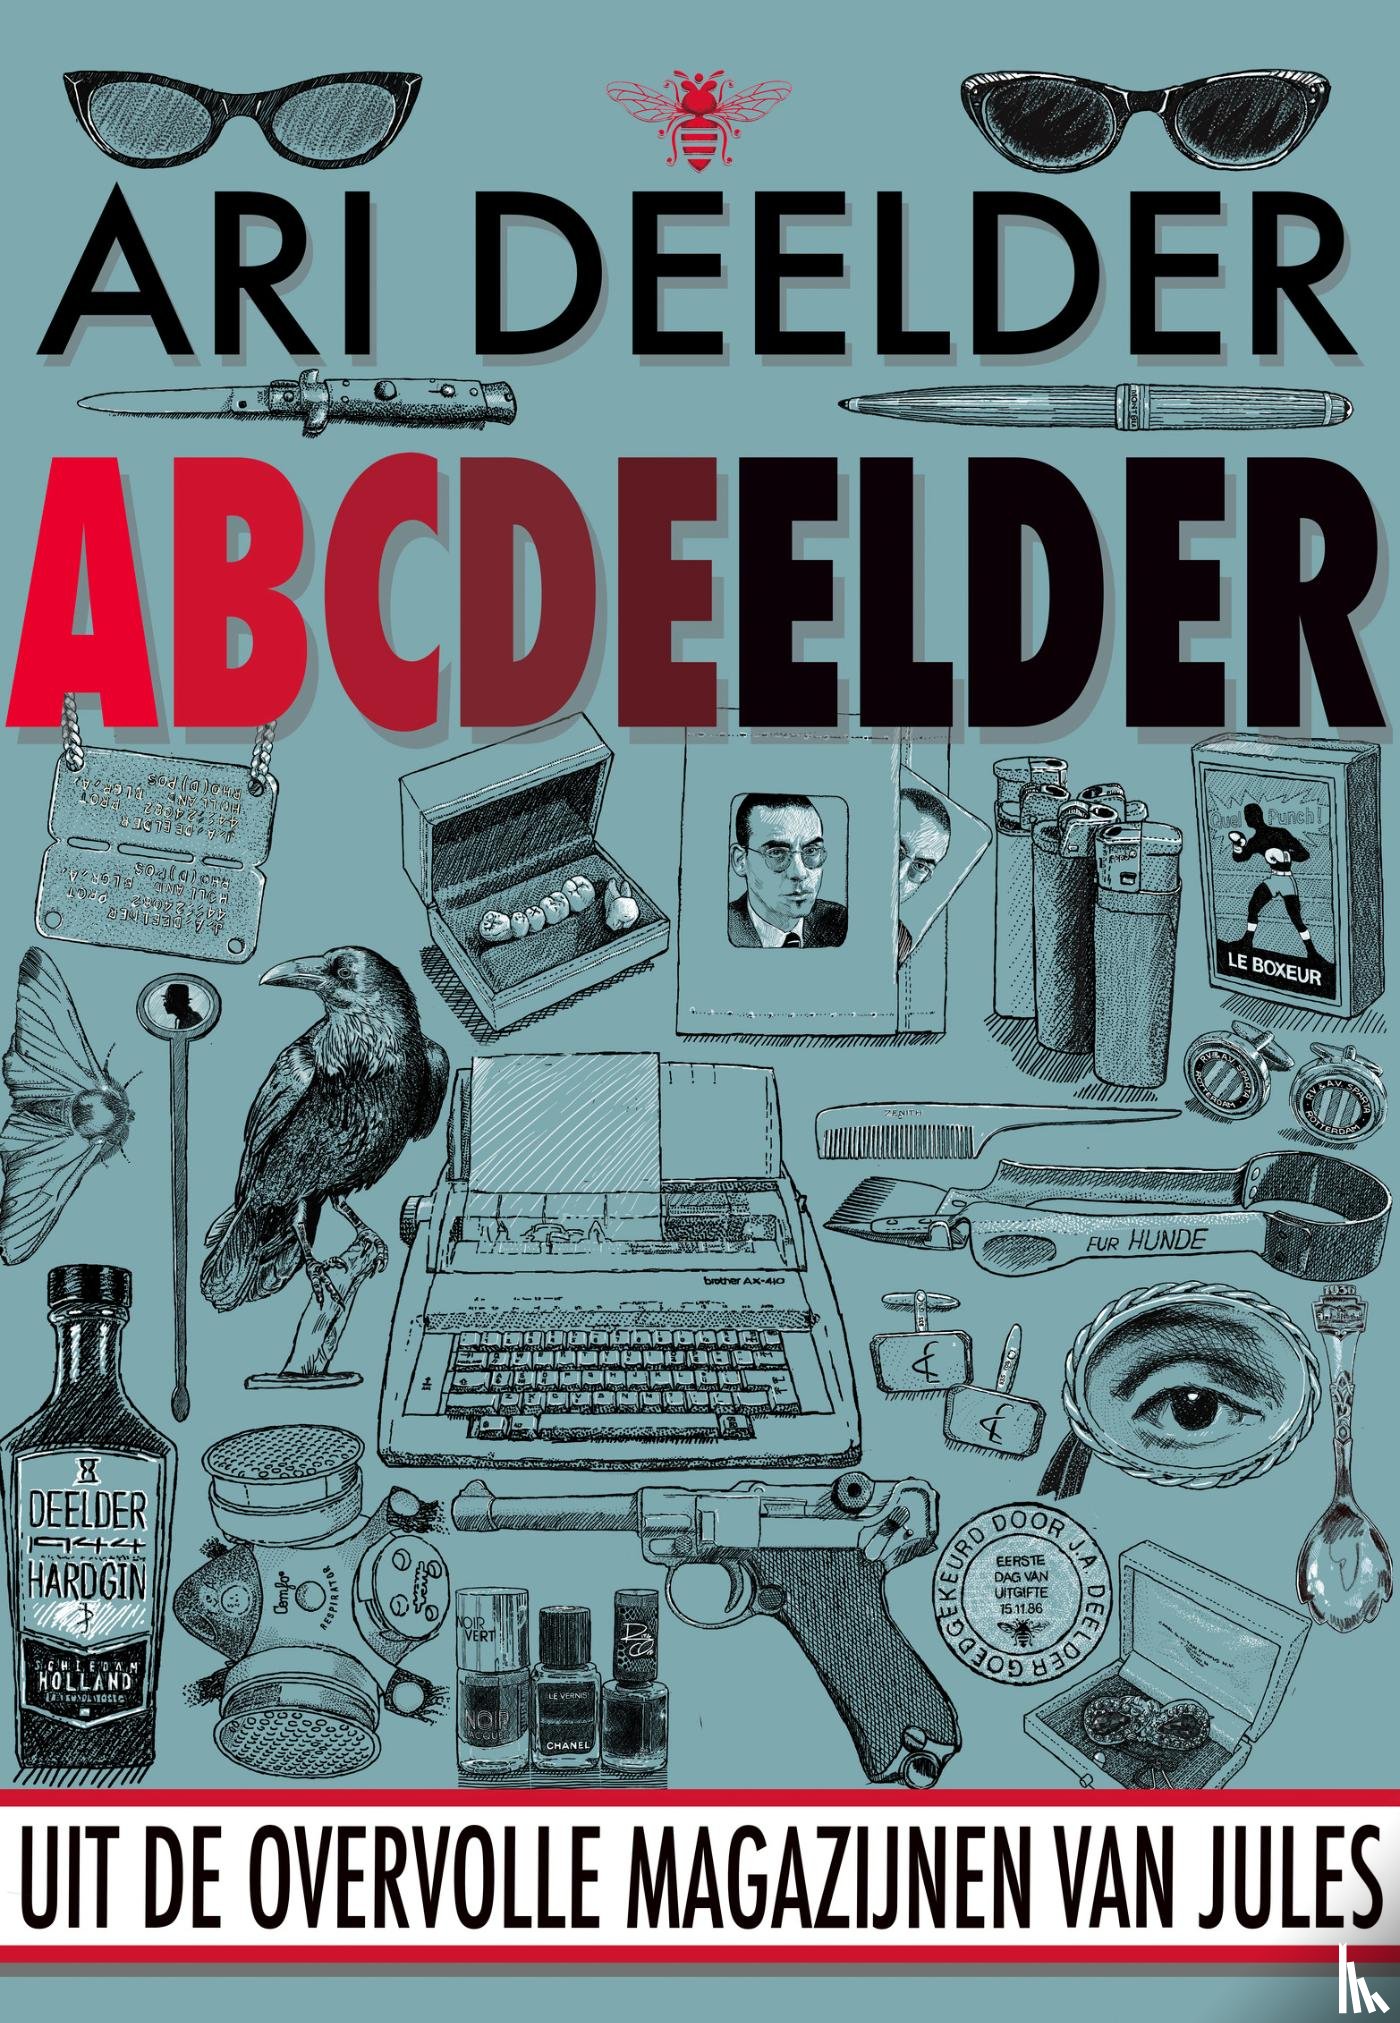 Deelder, Ari - ABCDeelder